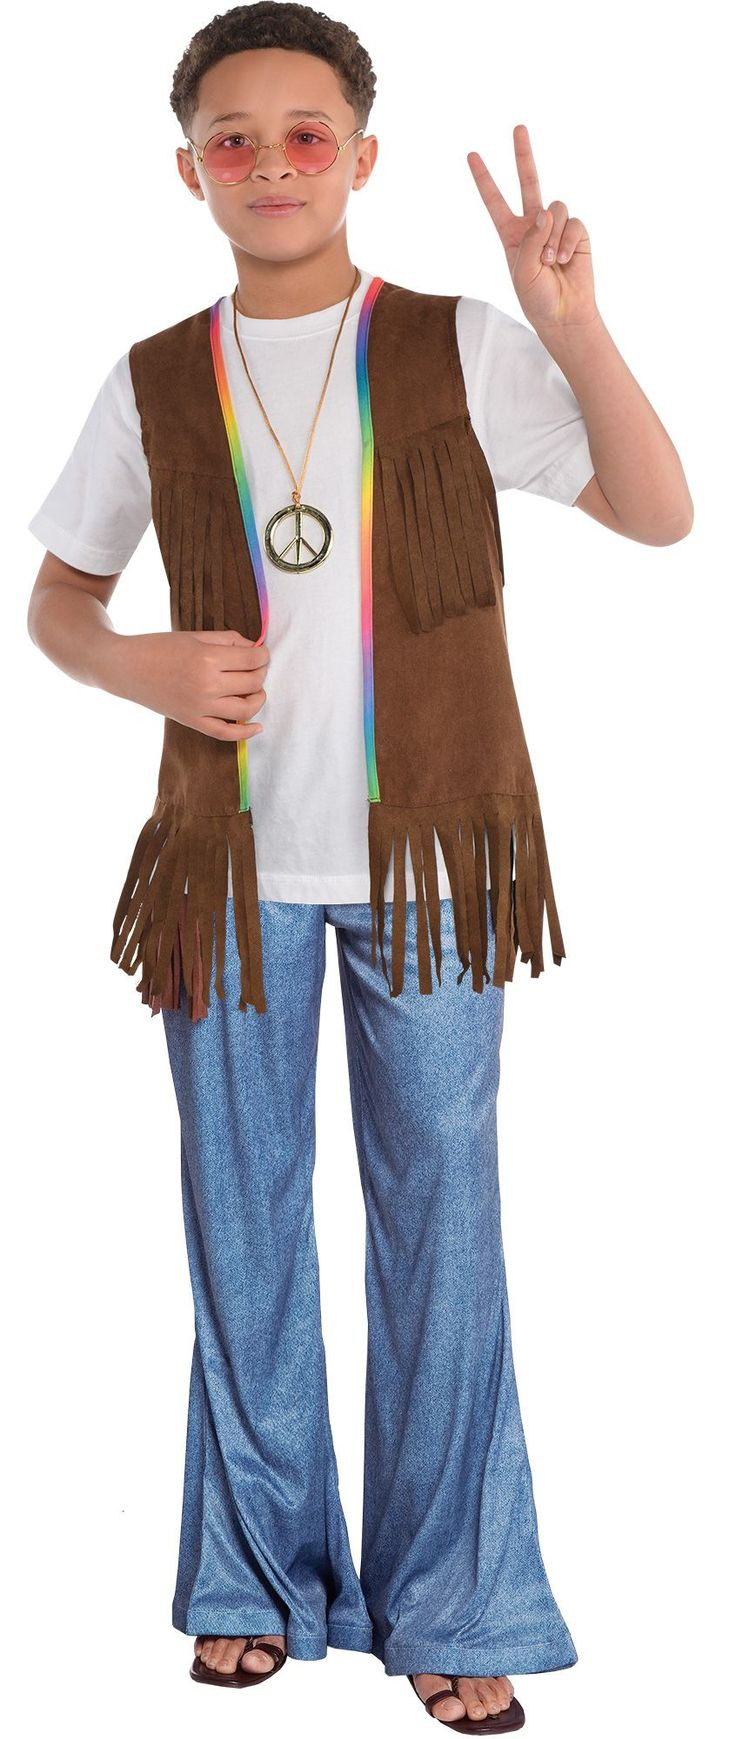 Disco Costume DIY
 The 25 best Hippie costume ideas on Pinterest